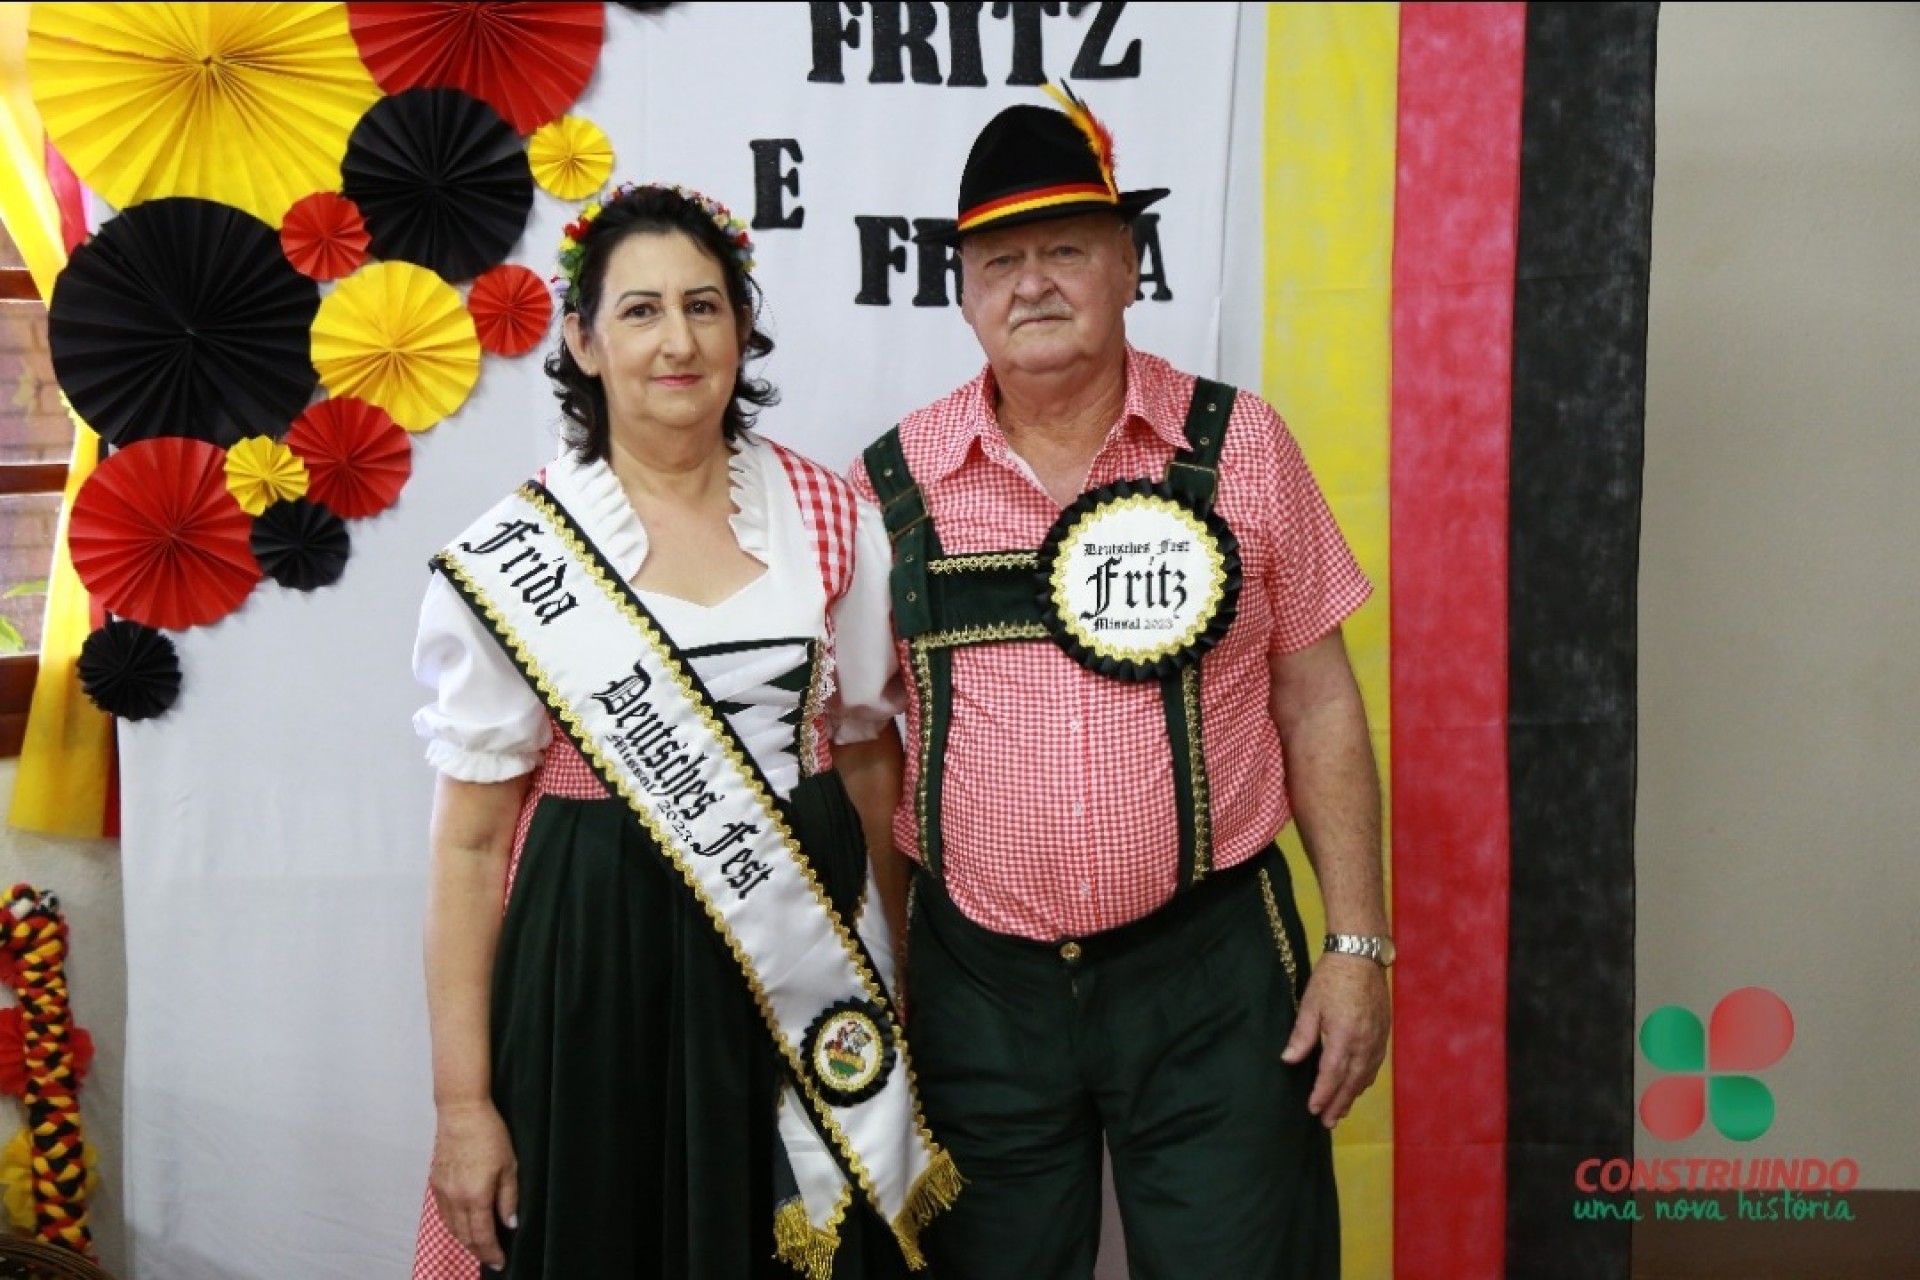 Helma Hanzen e José Hilário Stein é o Casal Fritz e Frida da 20ª Deutsches Fest de Missal